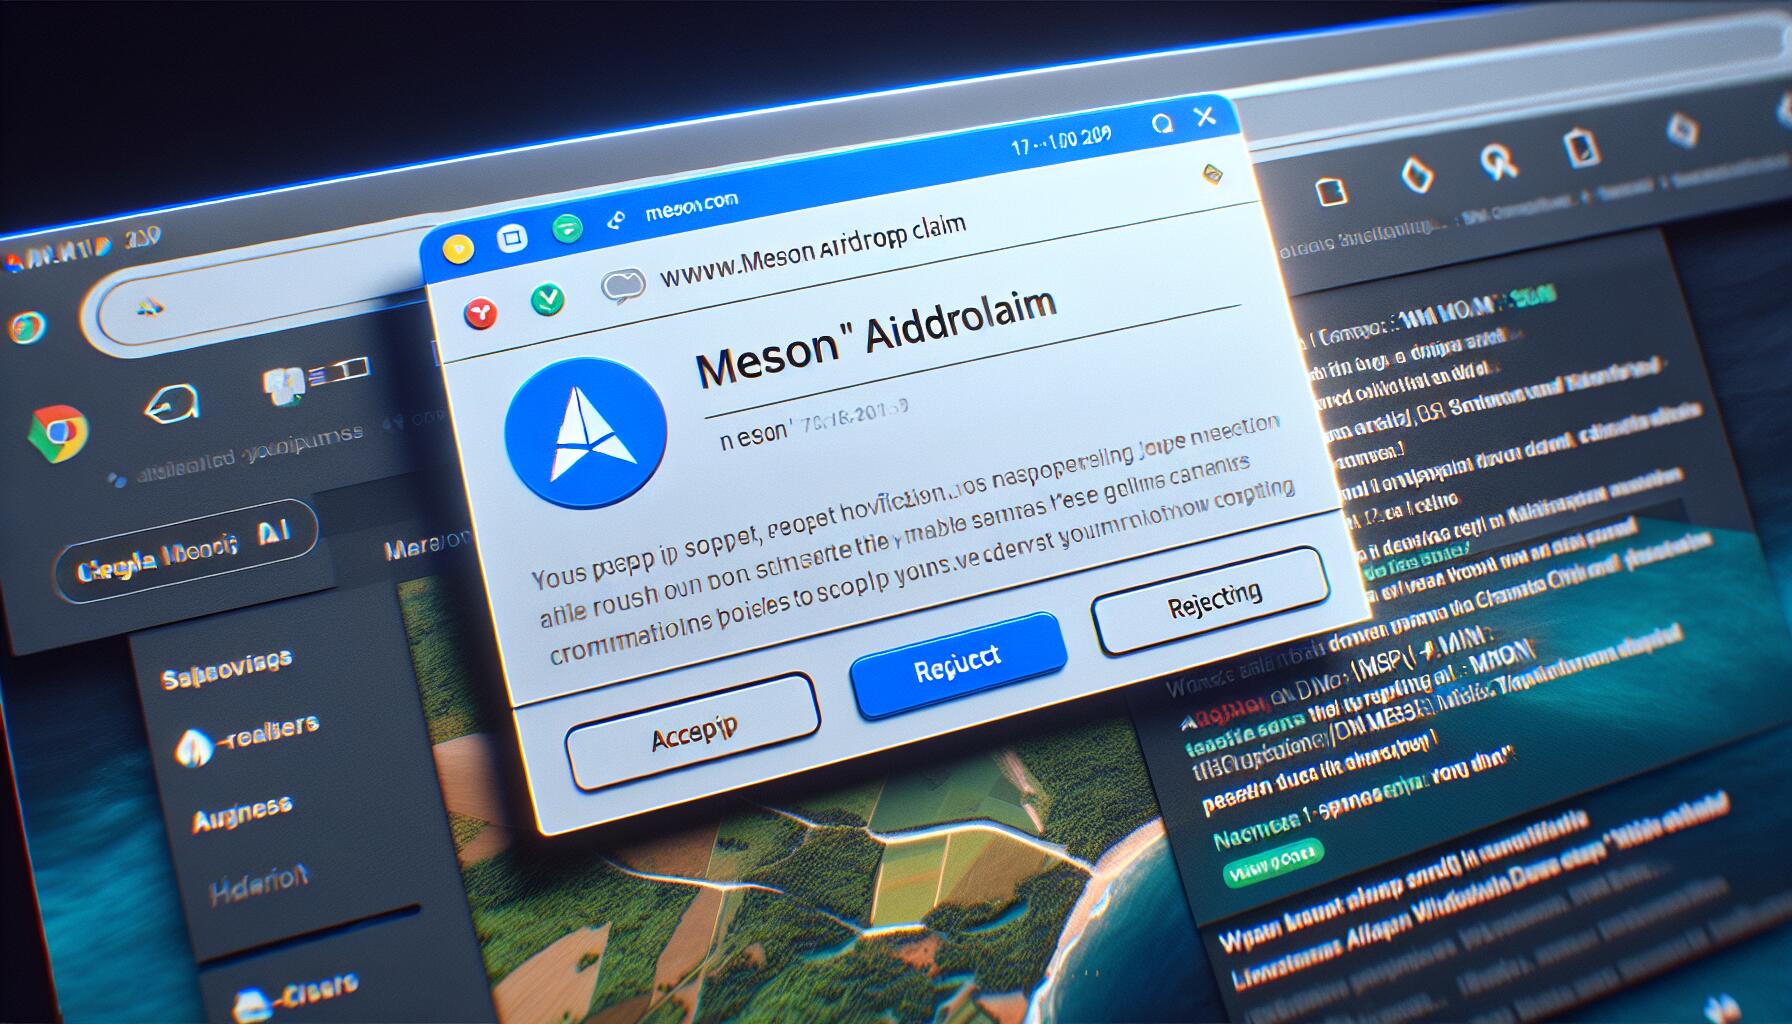 meson ($msn) airdrop claim ads